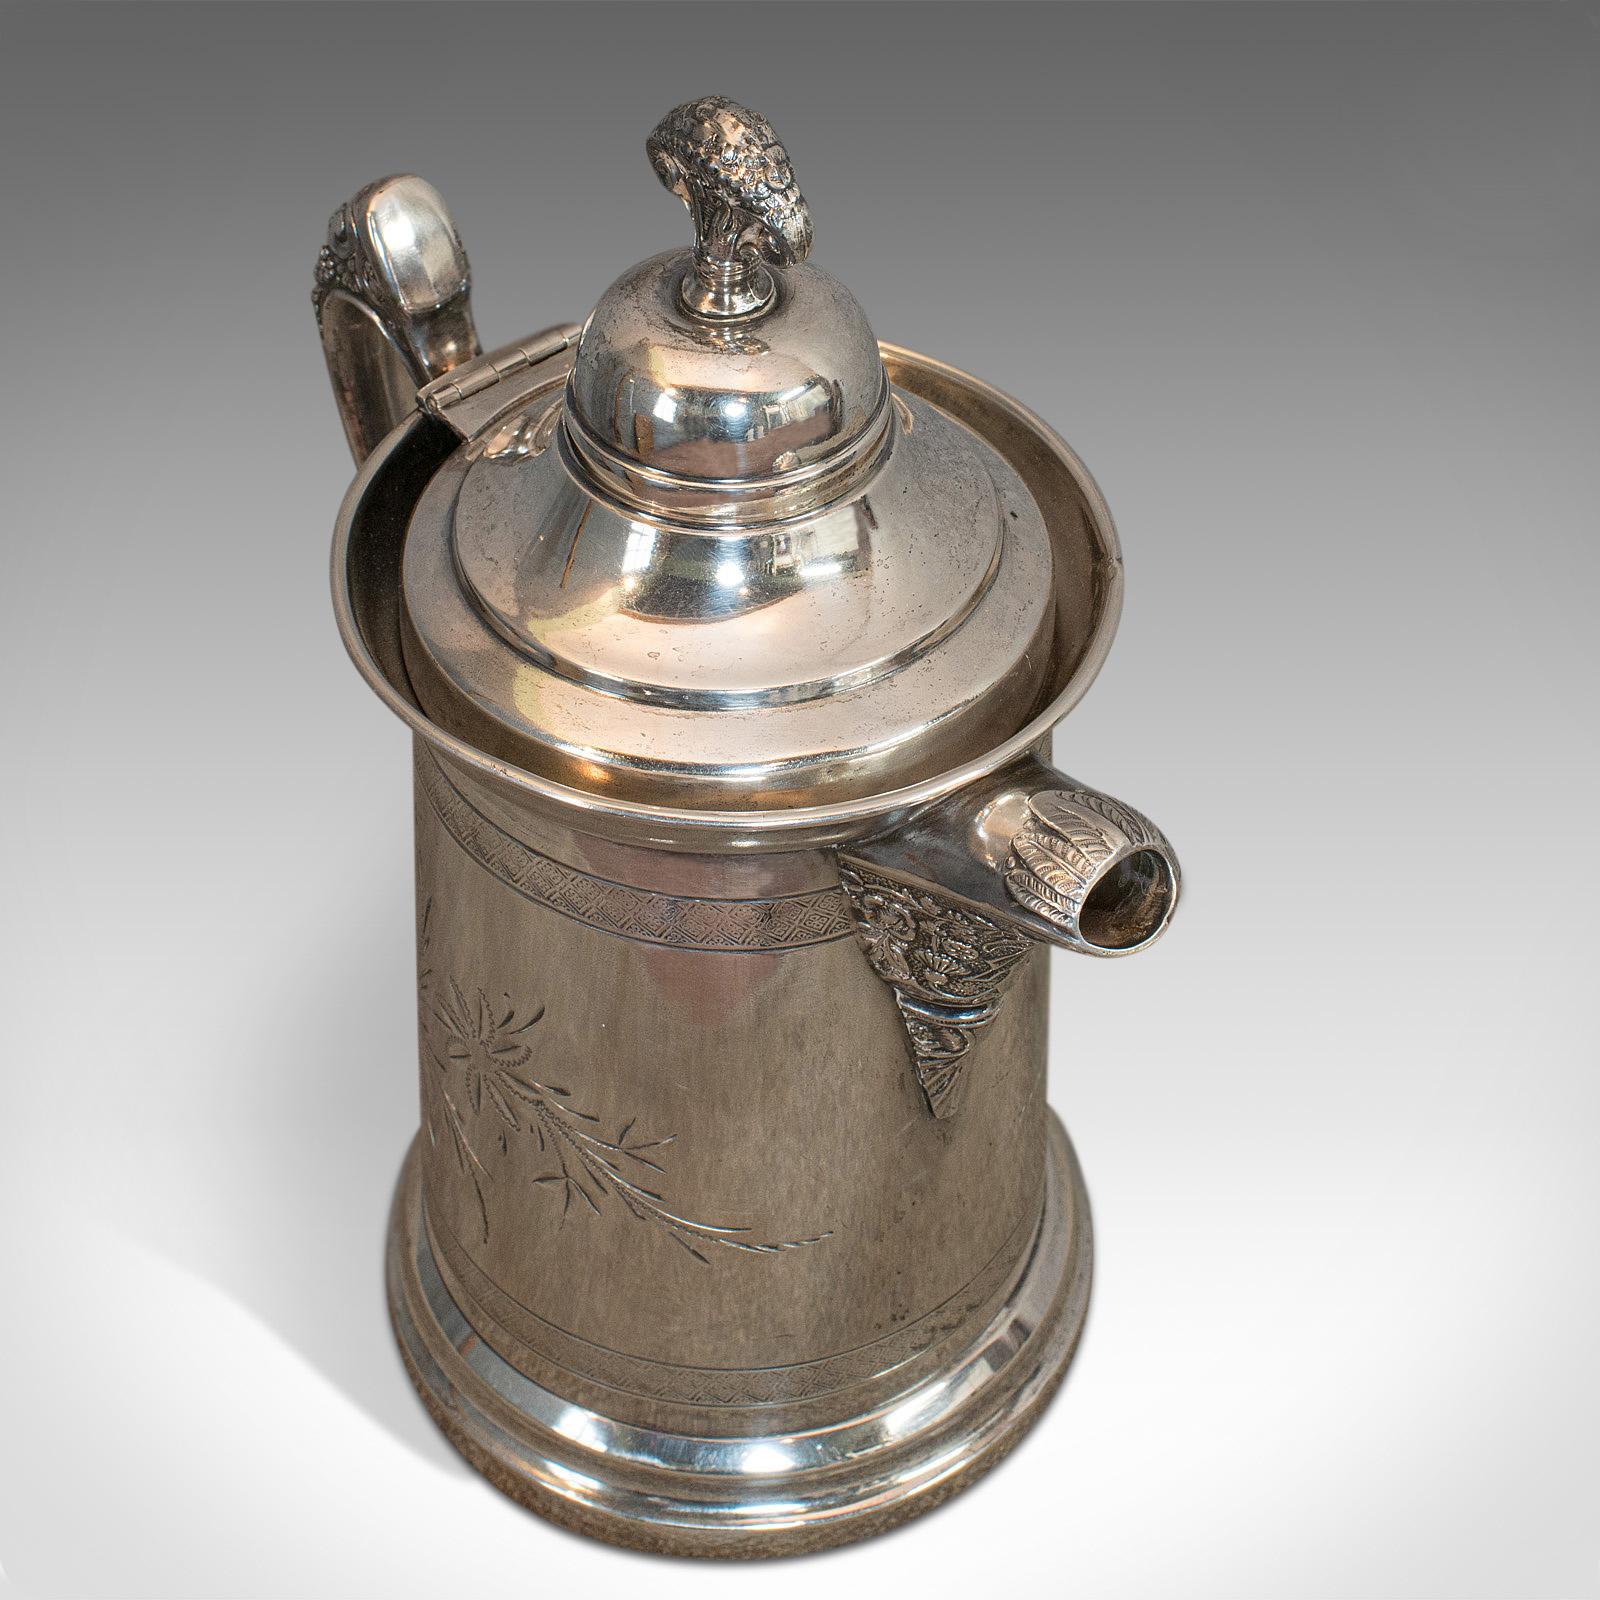 Antique Coffee Pot, English Silver Plate, Beverage Jug, 19th Century, circa 1900 1